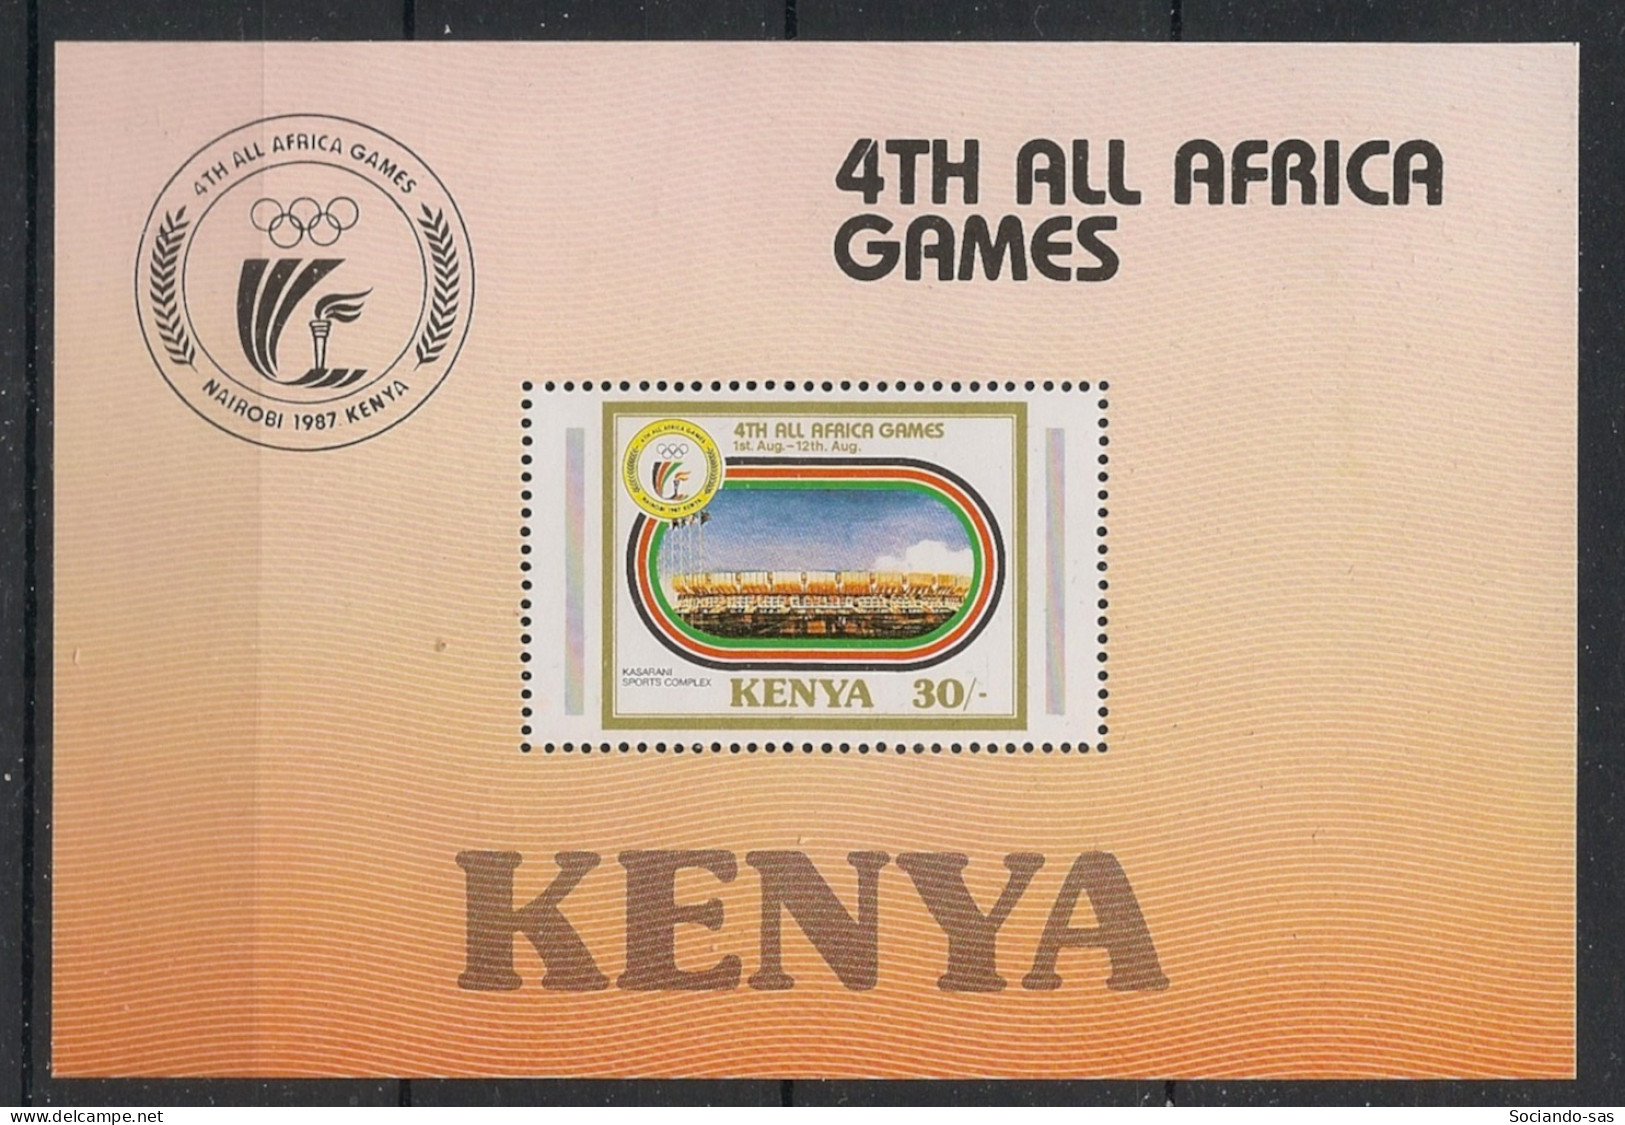 KENYA - 1987 - Bloc-feuillet BF N°YT. 31 - Jeux Africains - Neuf Luxe ** / MNH / Postfrisch - Kenya (1963-...)